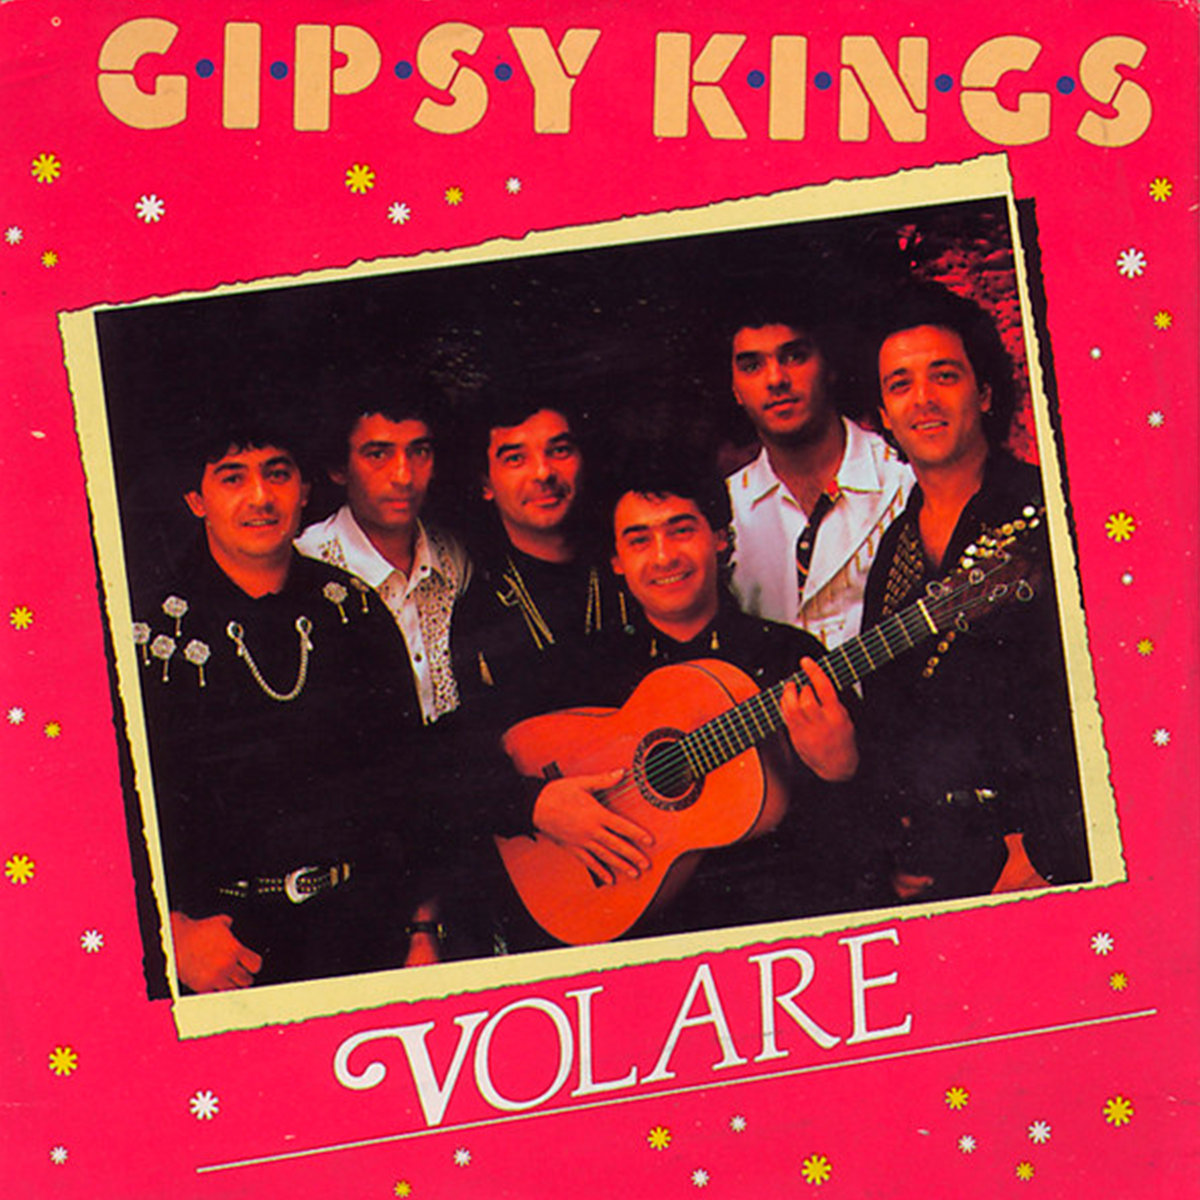 Gipsy kings volare. Gipsy Kings 1989. Группа Gipsy Kings. Gipsy Kings (1988) обложка. Gipsy Kings обложка.